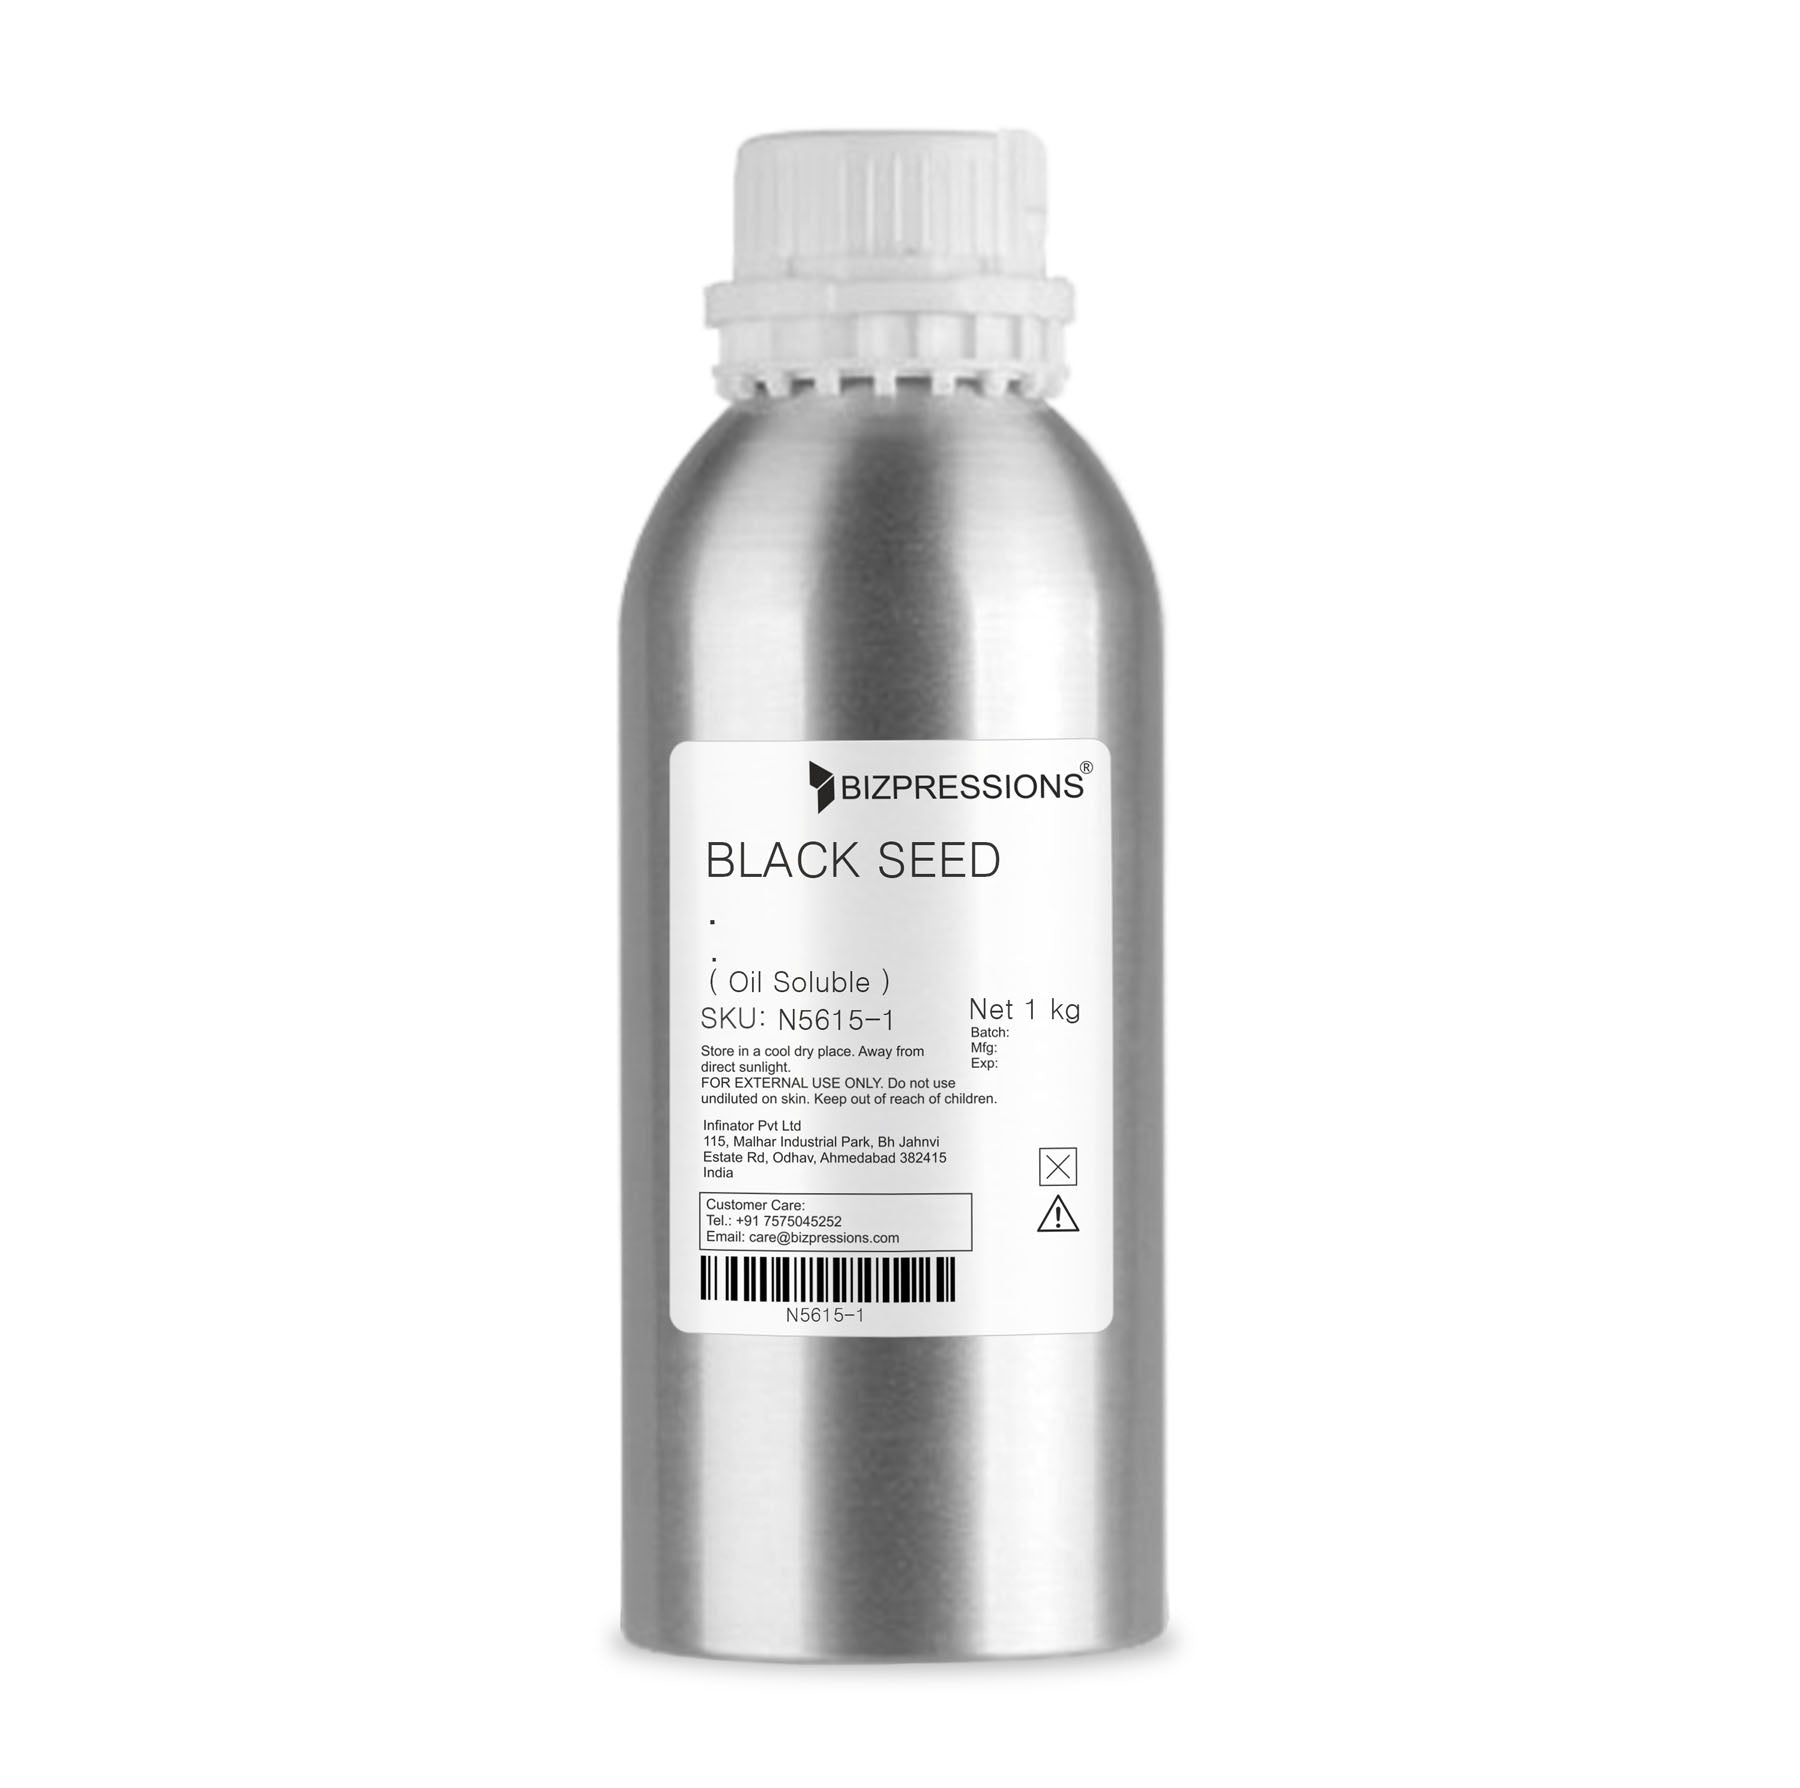 BLACK SEED - Fragrance ( Oil Soluble ) - 1 kg